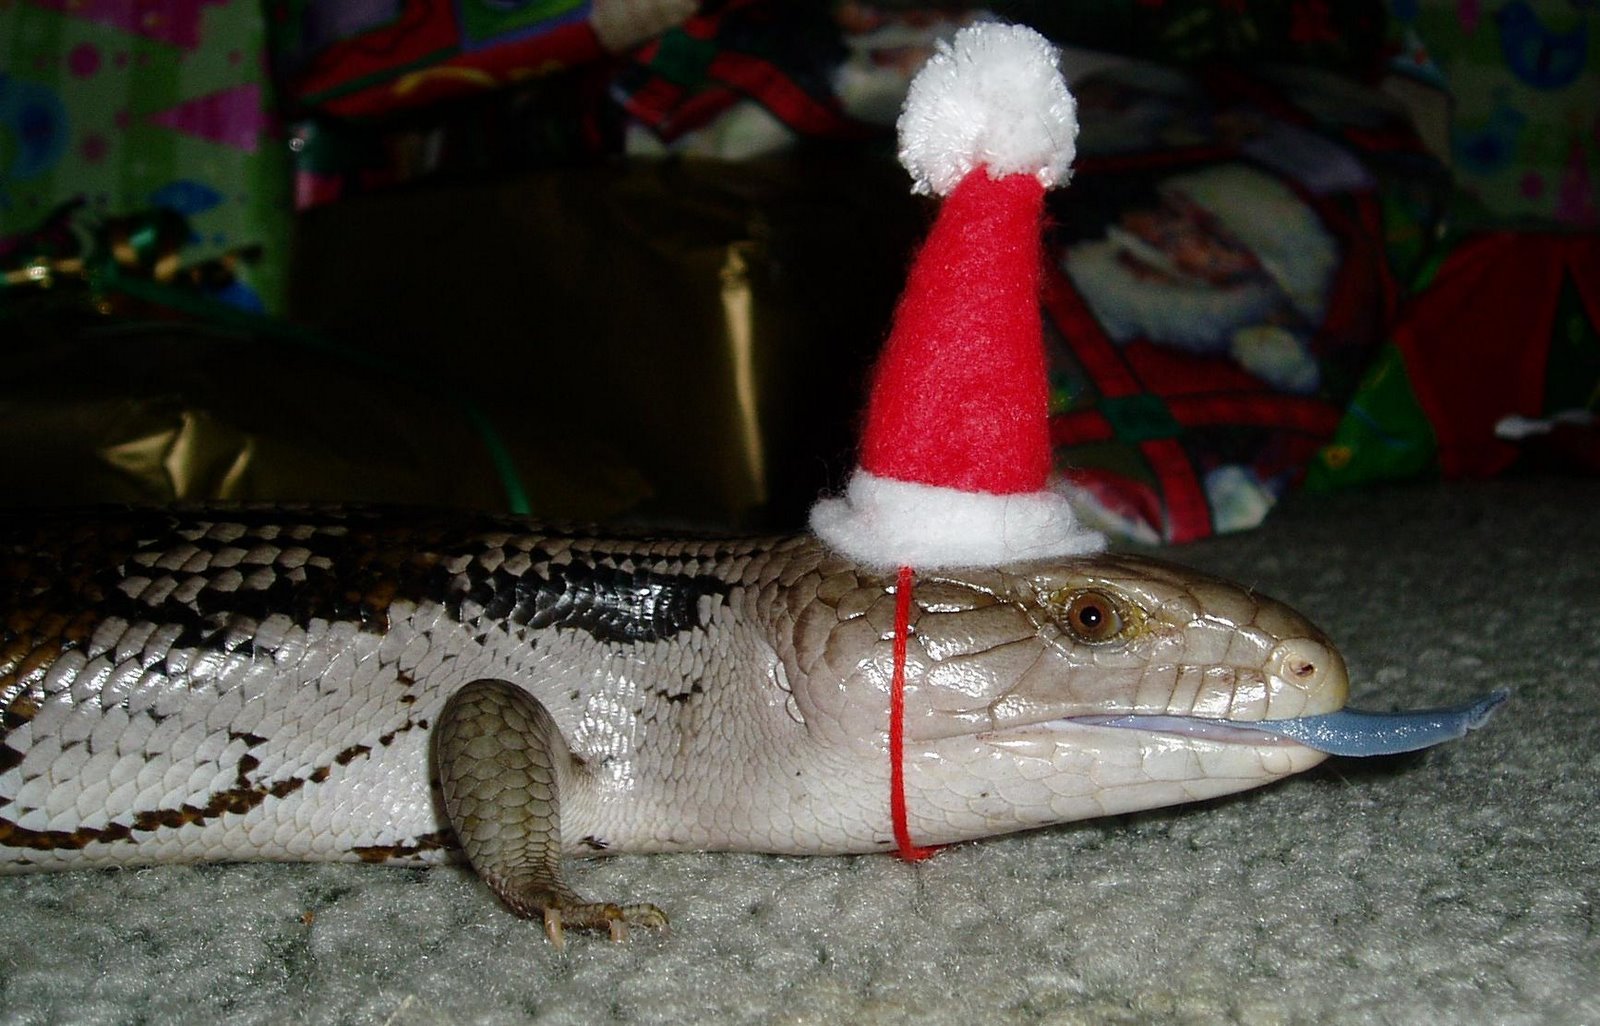 [lizards+in+santa+hat.JPG]